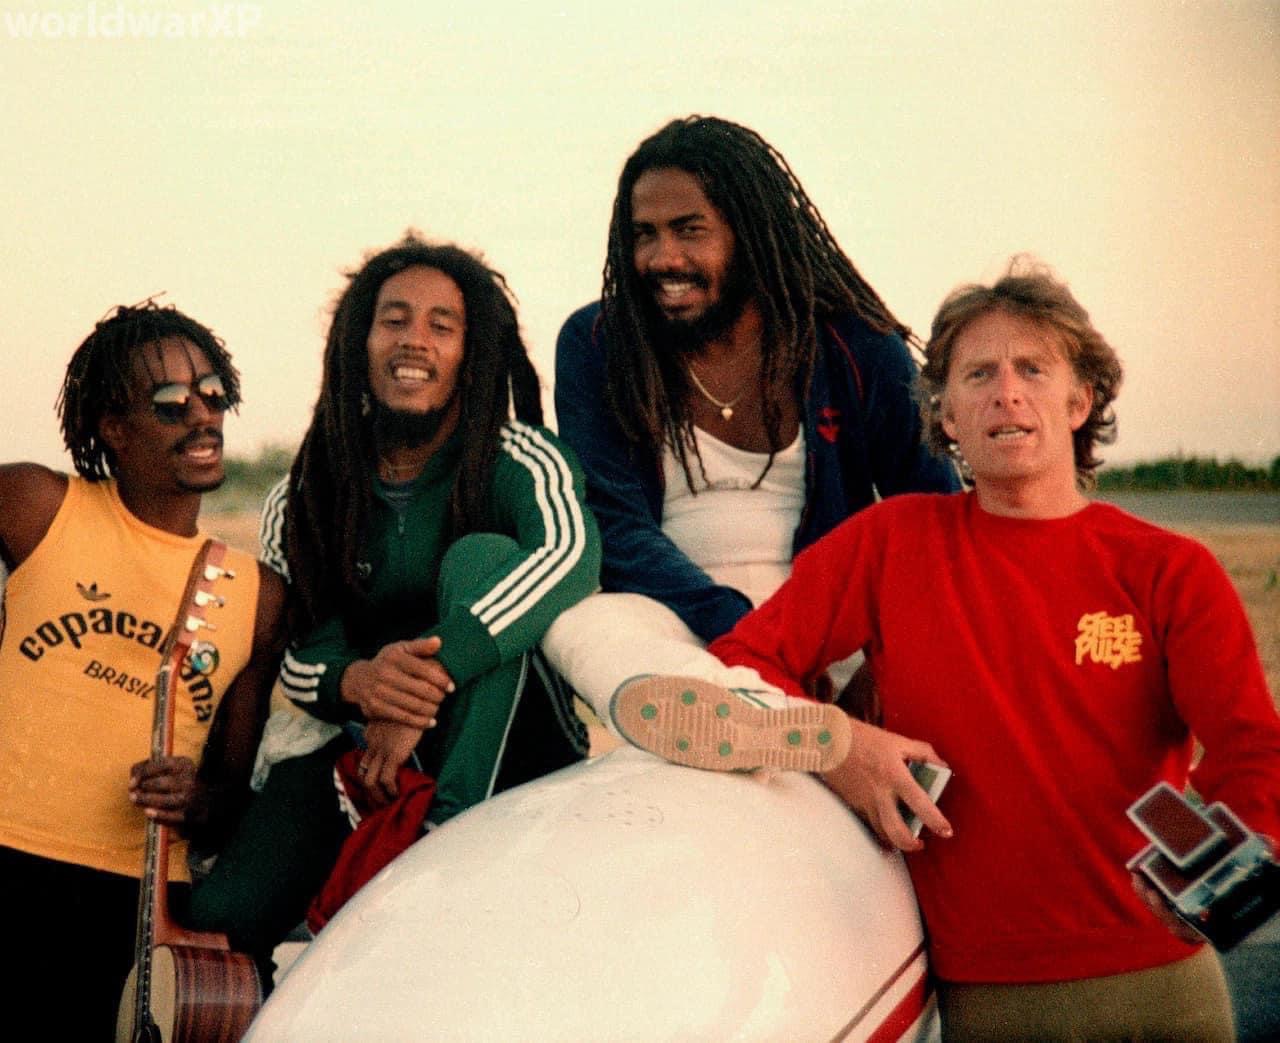 Junior Murvin, Bob Marley, Jacob Miller & Chris Blackwell in Jamacia 1980